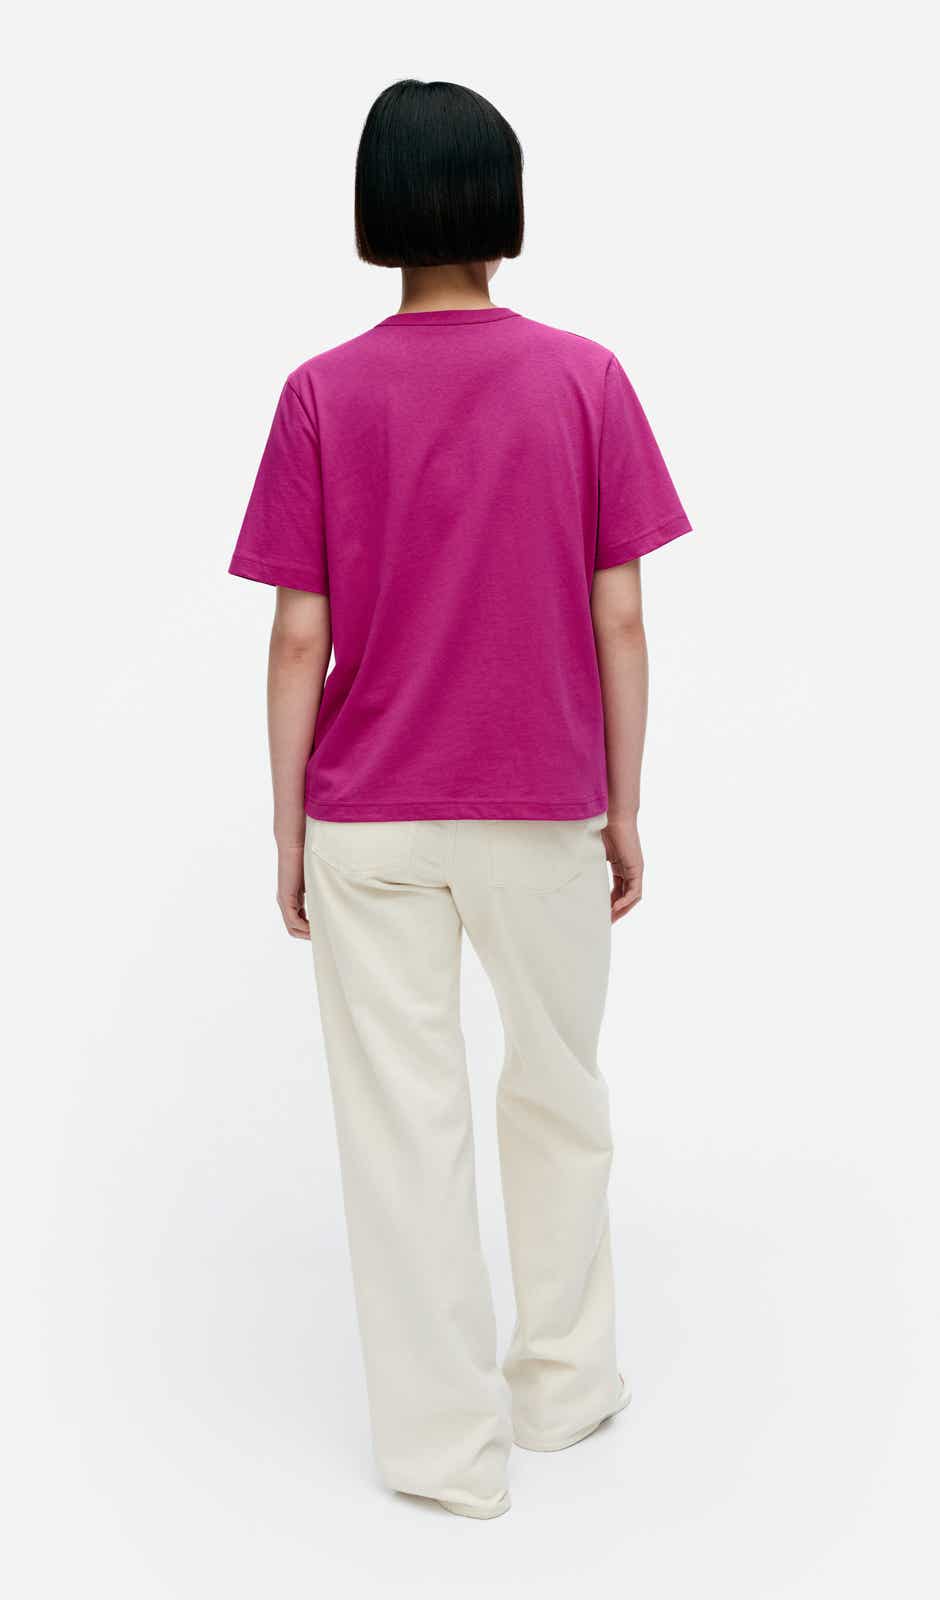 Erna Unikko Placement t-shirt – cotton jersey